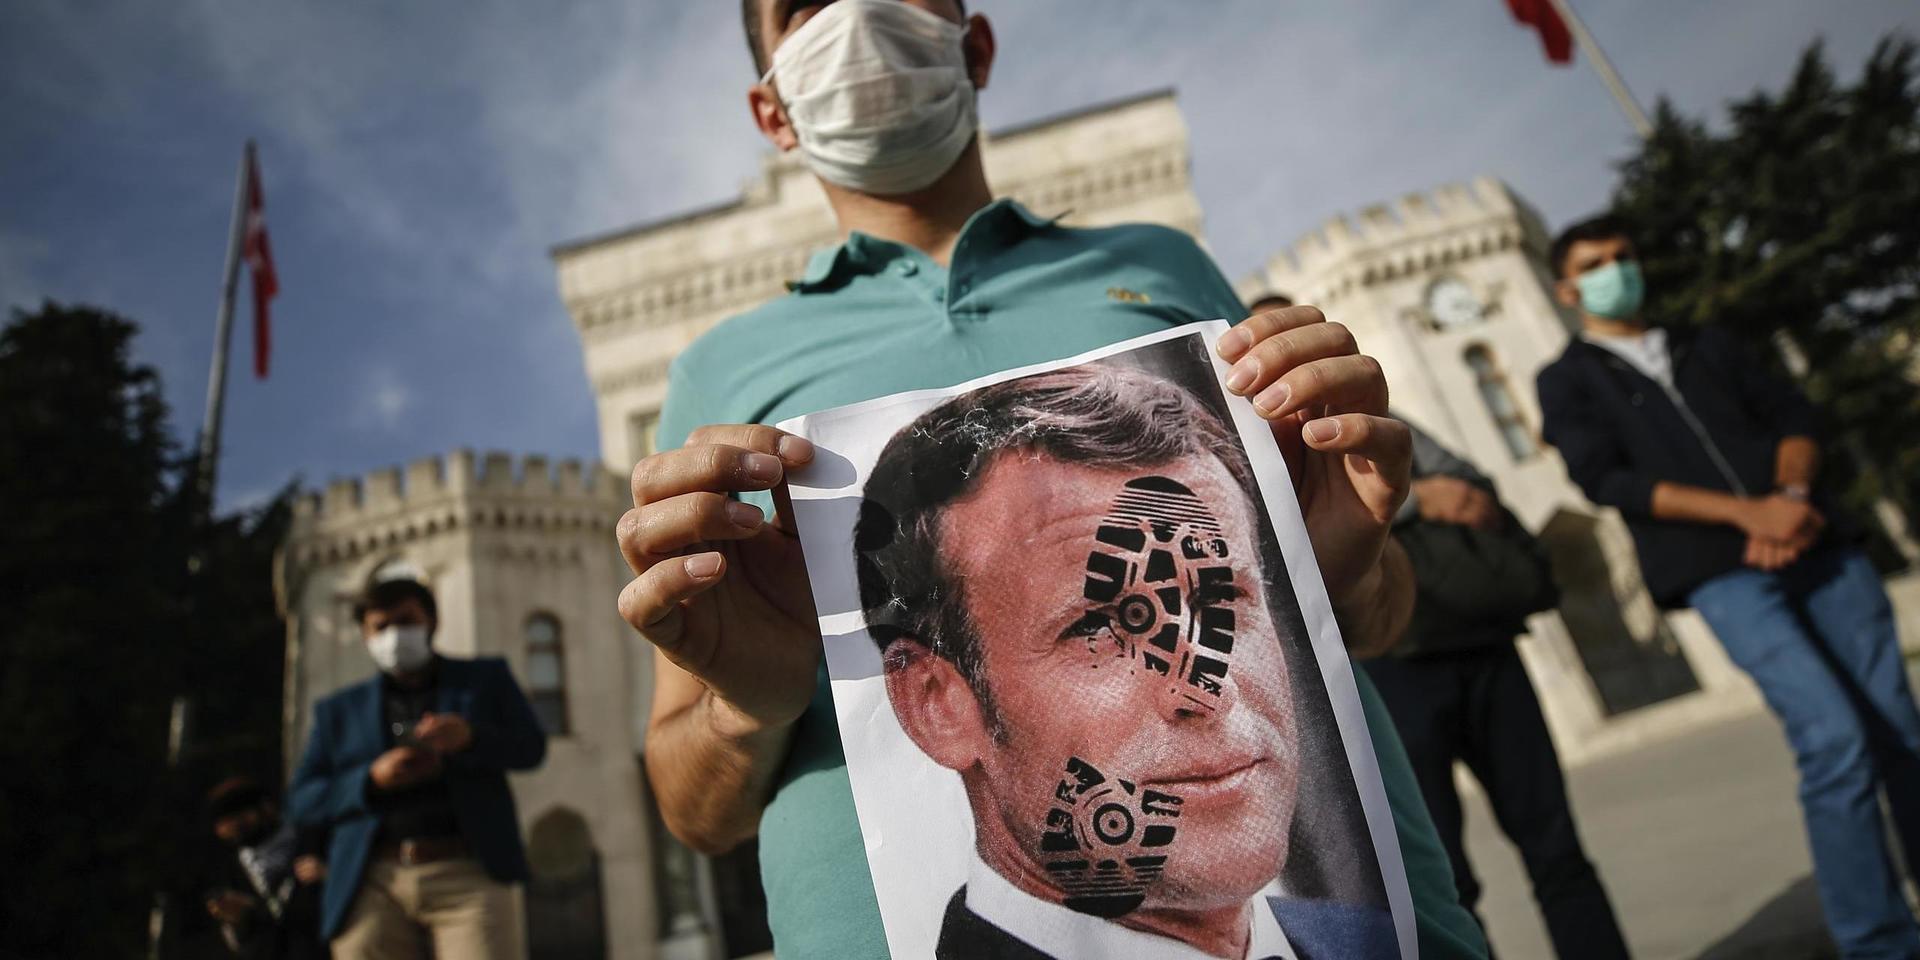 En ung man protesterar mot Frankrikes president Emmanuel Macron vid en demonstration i Istanbul.